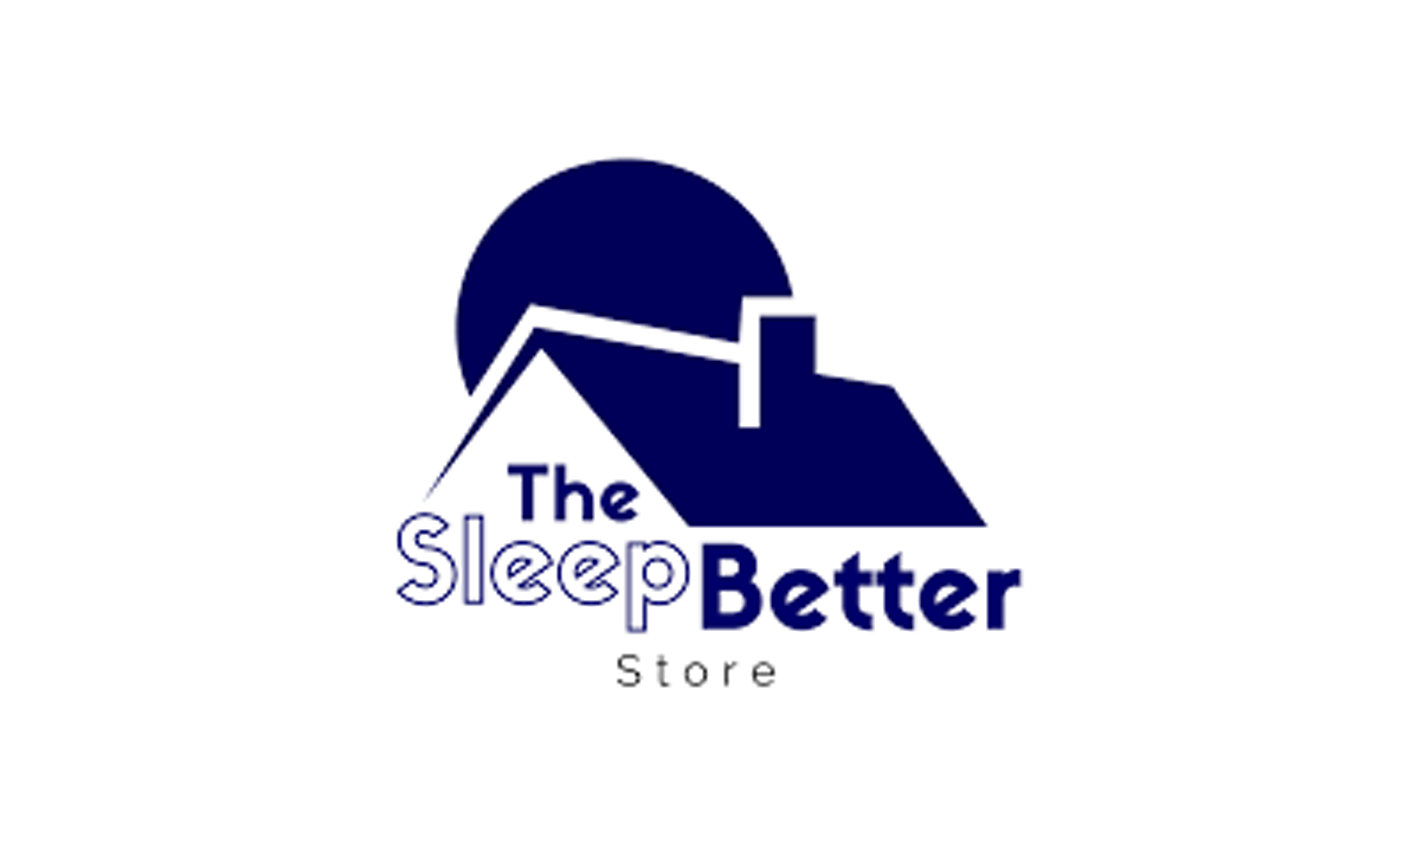 The Better Sleep Store 